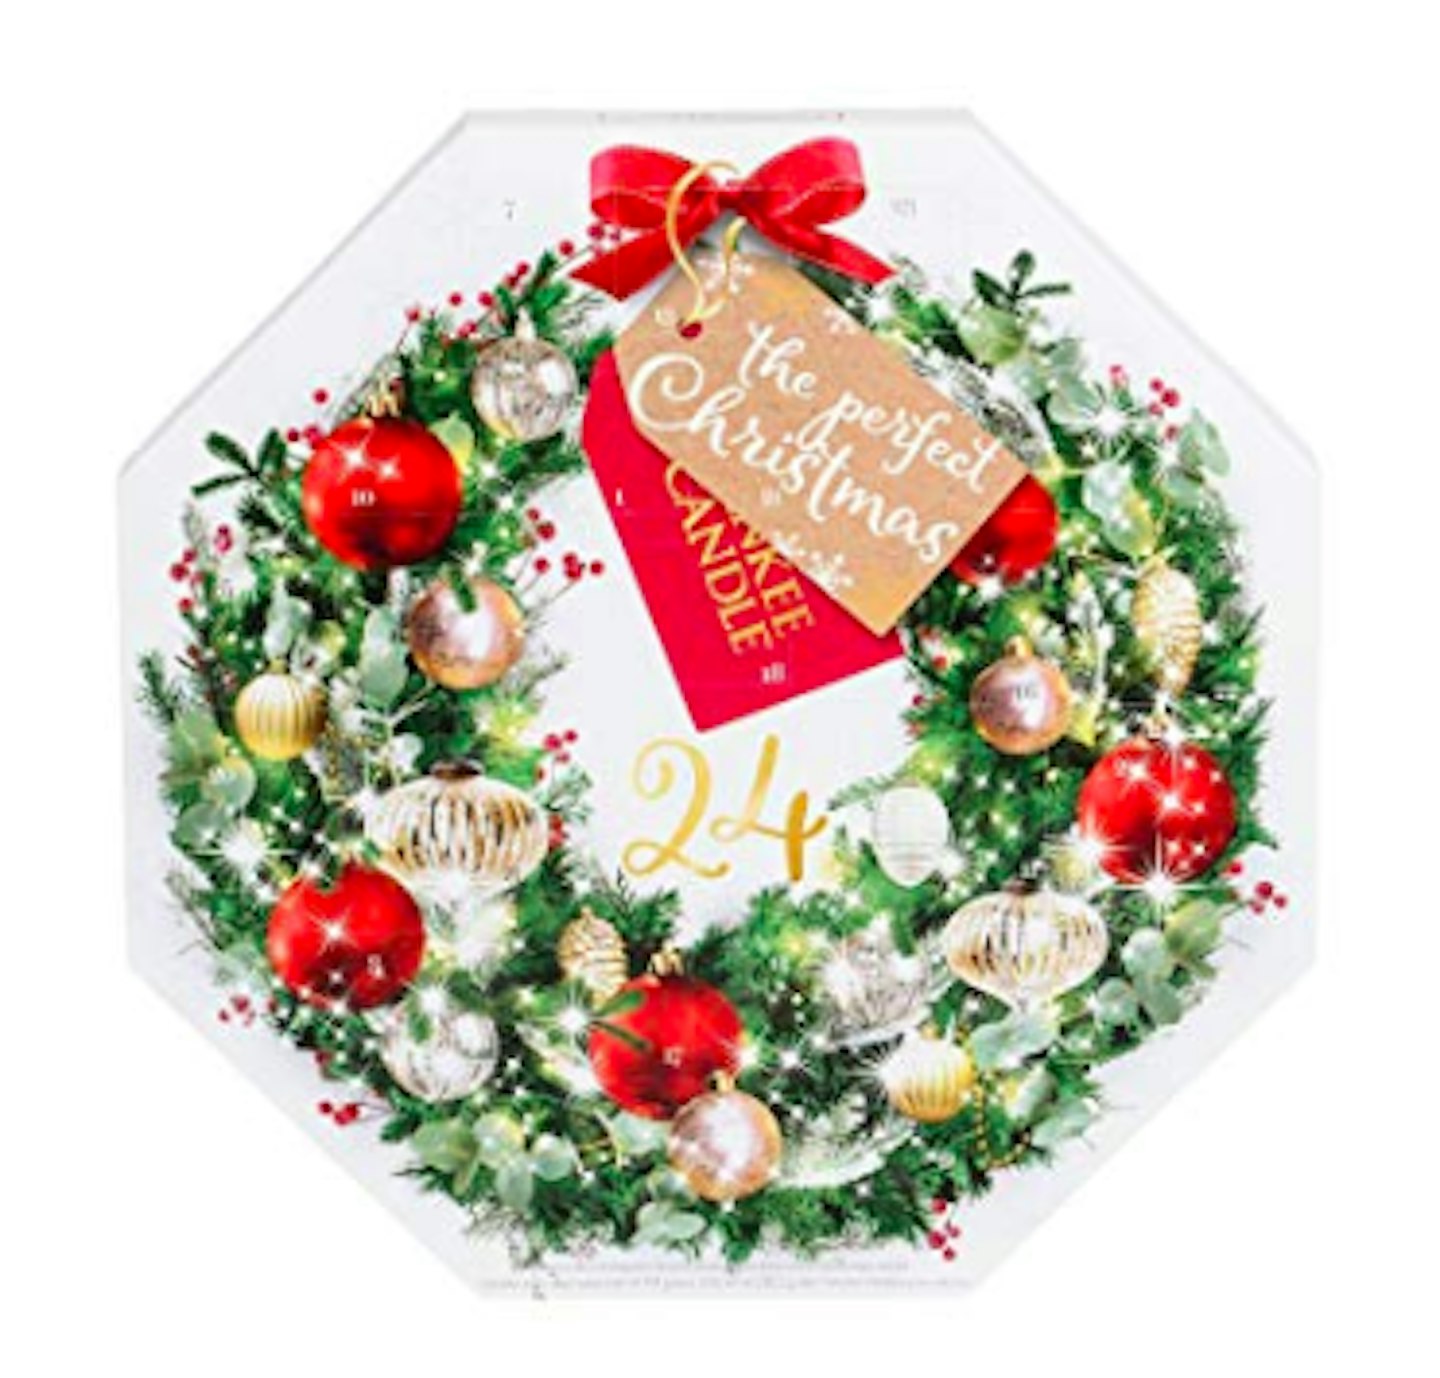 Yankee Candle Advent Calendar Winter Wreath Gift Set black friday amazon